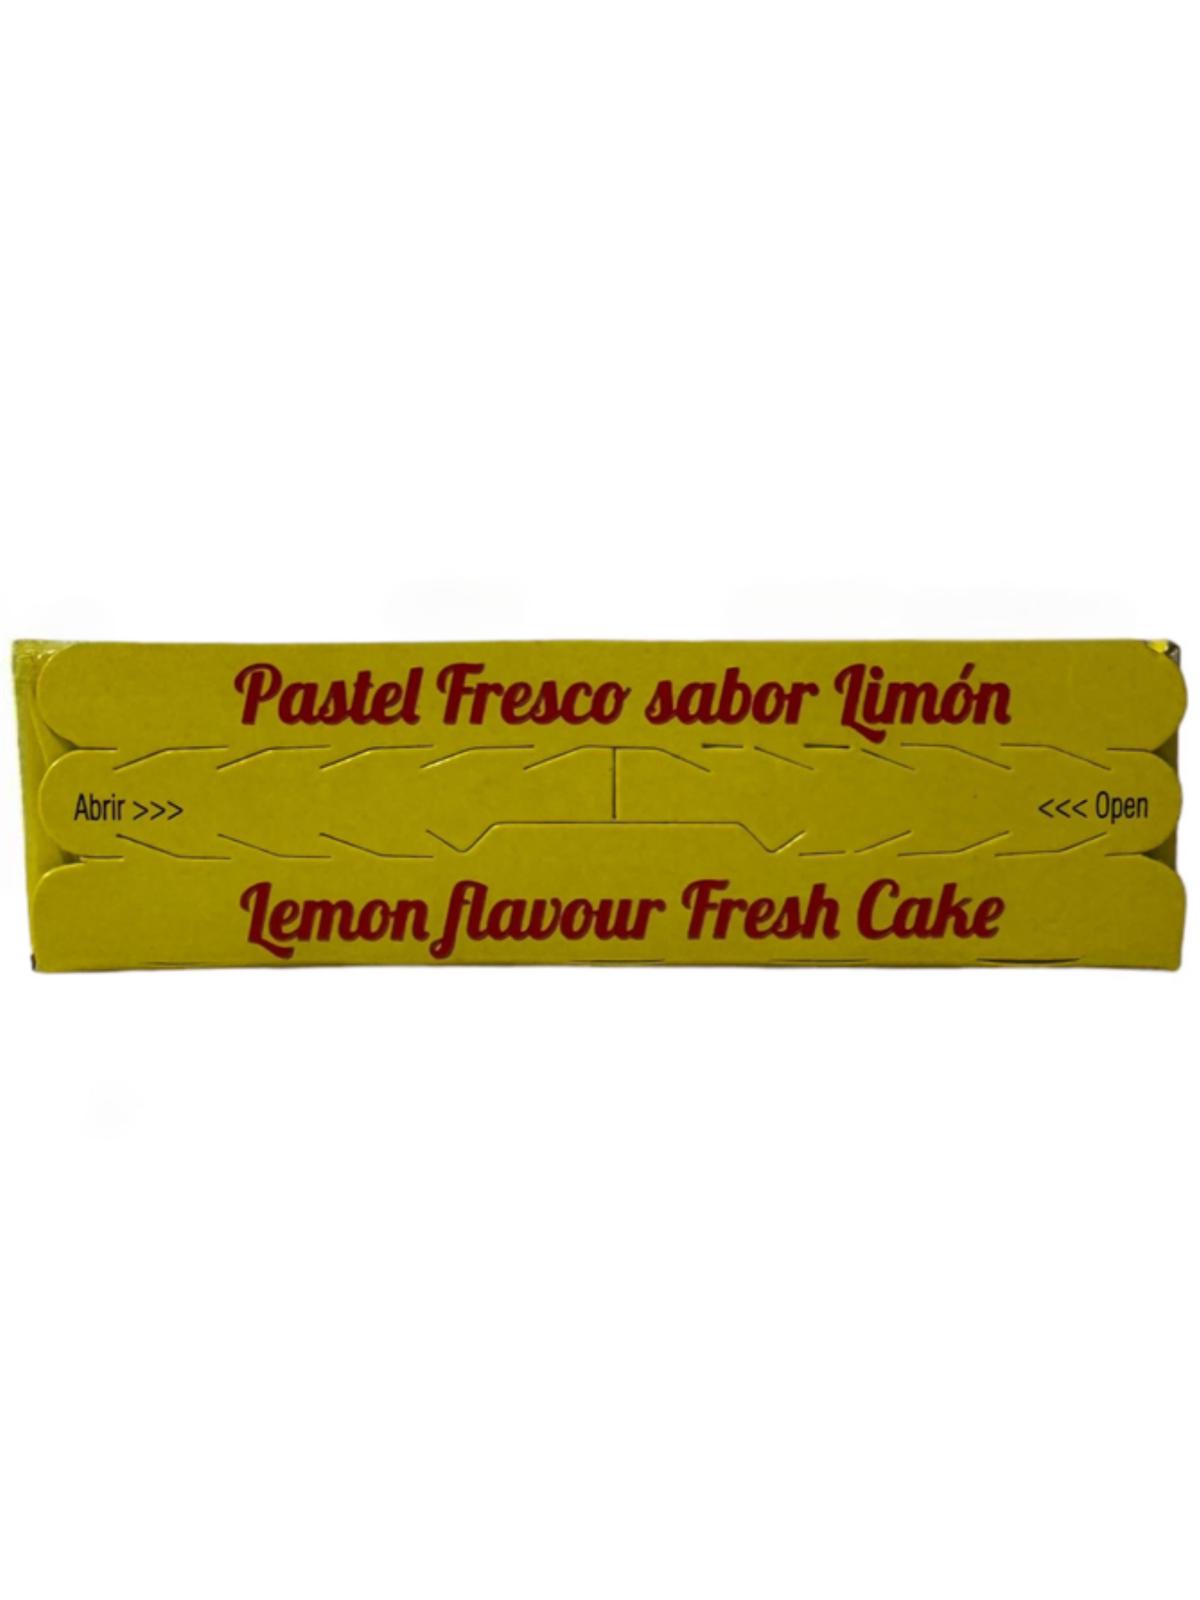 Calnort Pastel Fresco Sabor Limon Spanish Lemon Flavour Fresh Cake 75g  - 4 Pack Total 300g